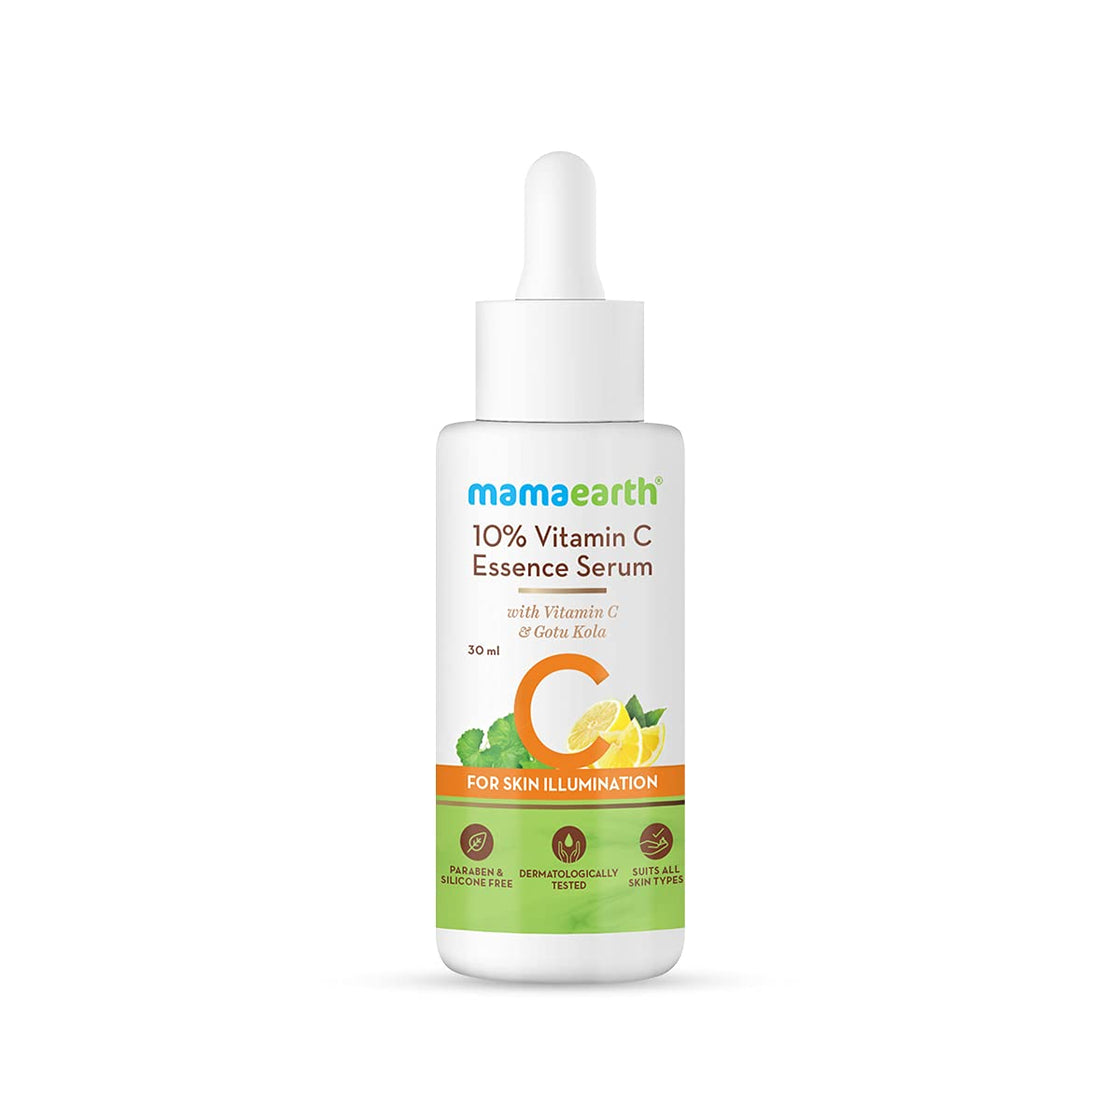 Mamaearth 10% Vitamin C Face Serum, Essence Serum With Vitamin C & Gotu Kola For Skin Illumination